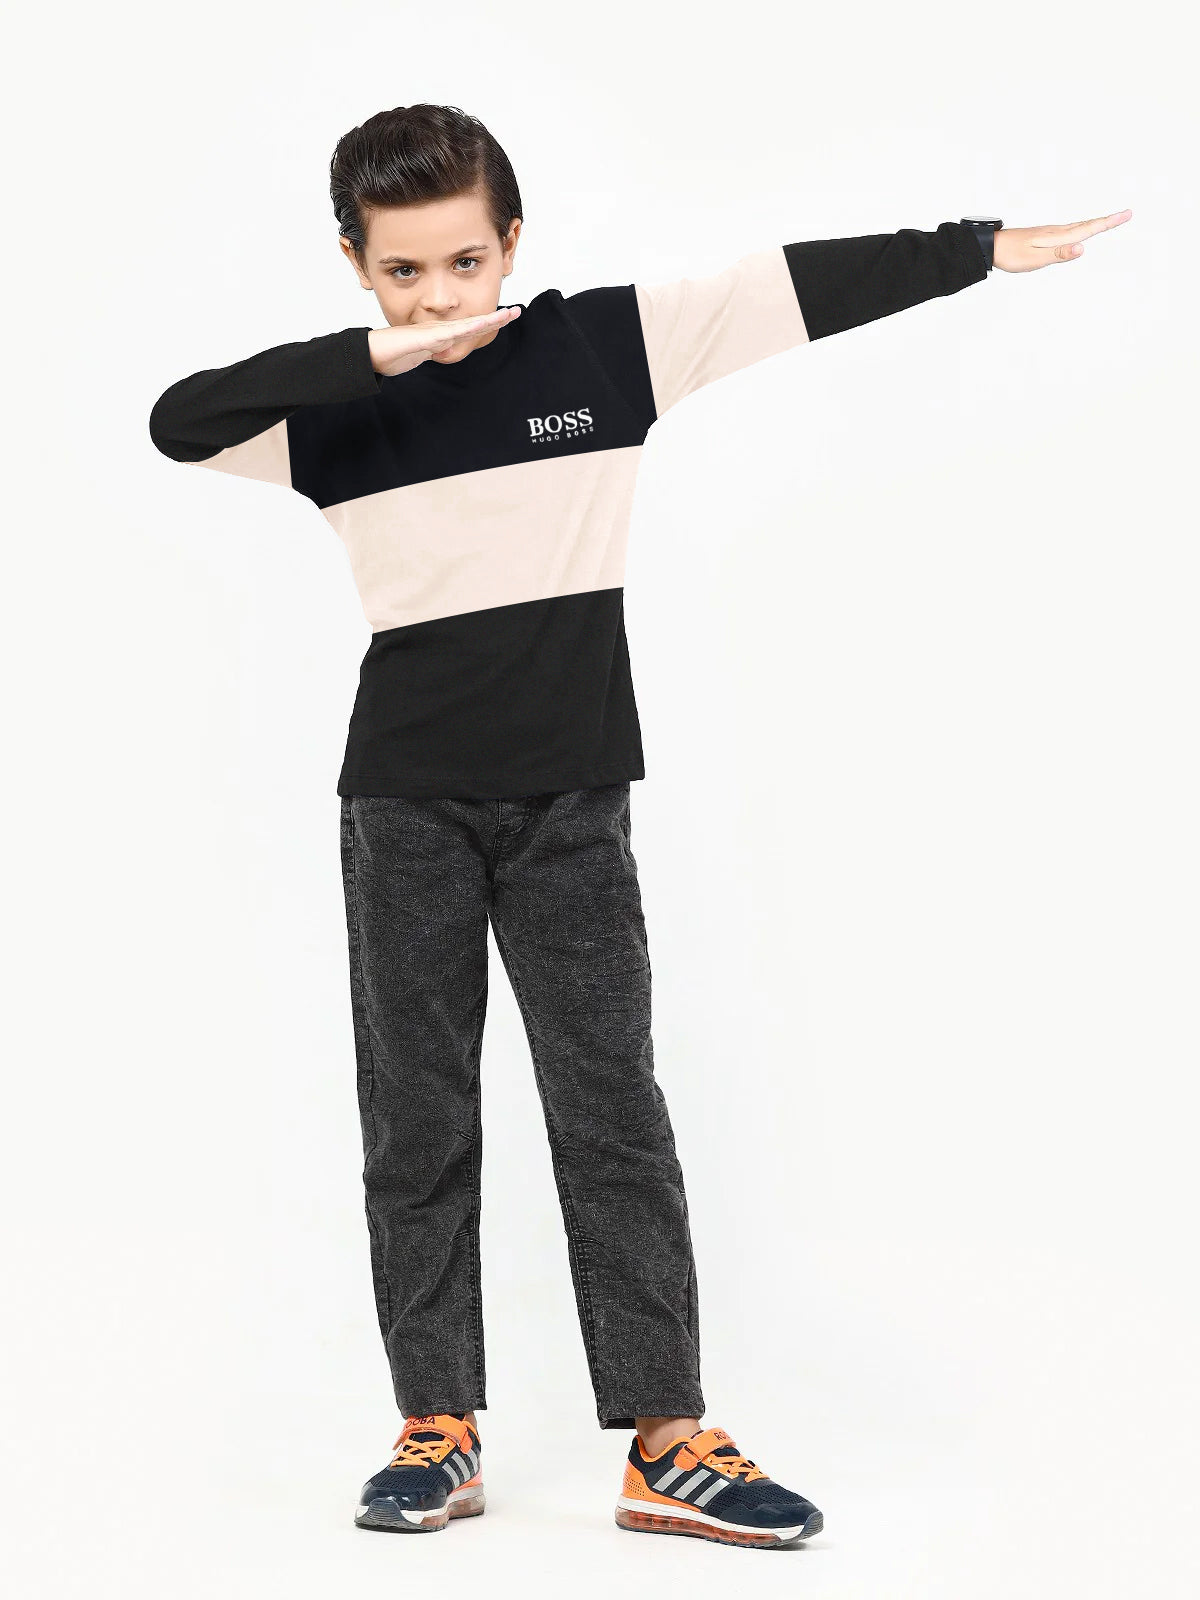 Crew Neck Long Sleeve Single Jersey Tee Shirt For Kids-Dark Navy With Panel-AZ144